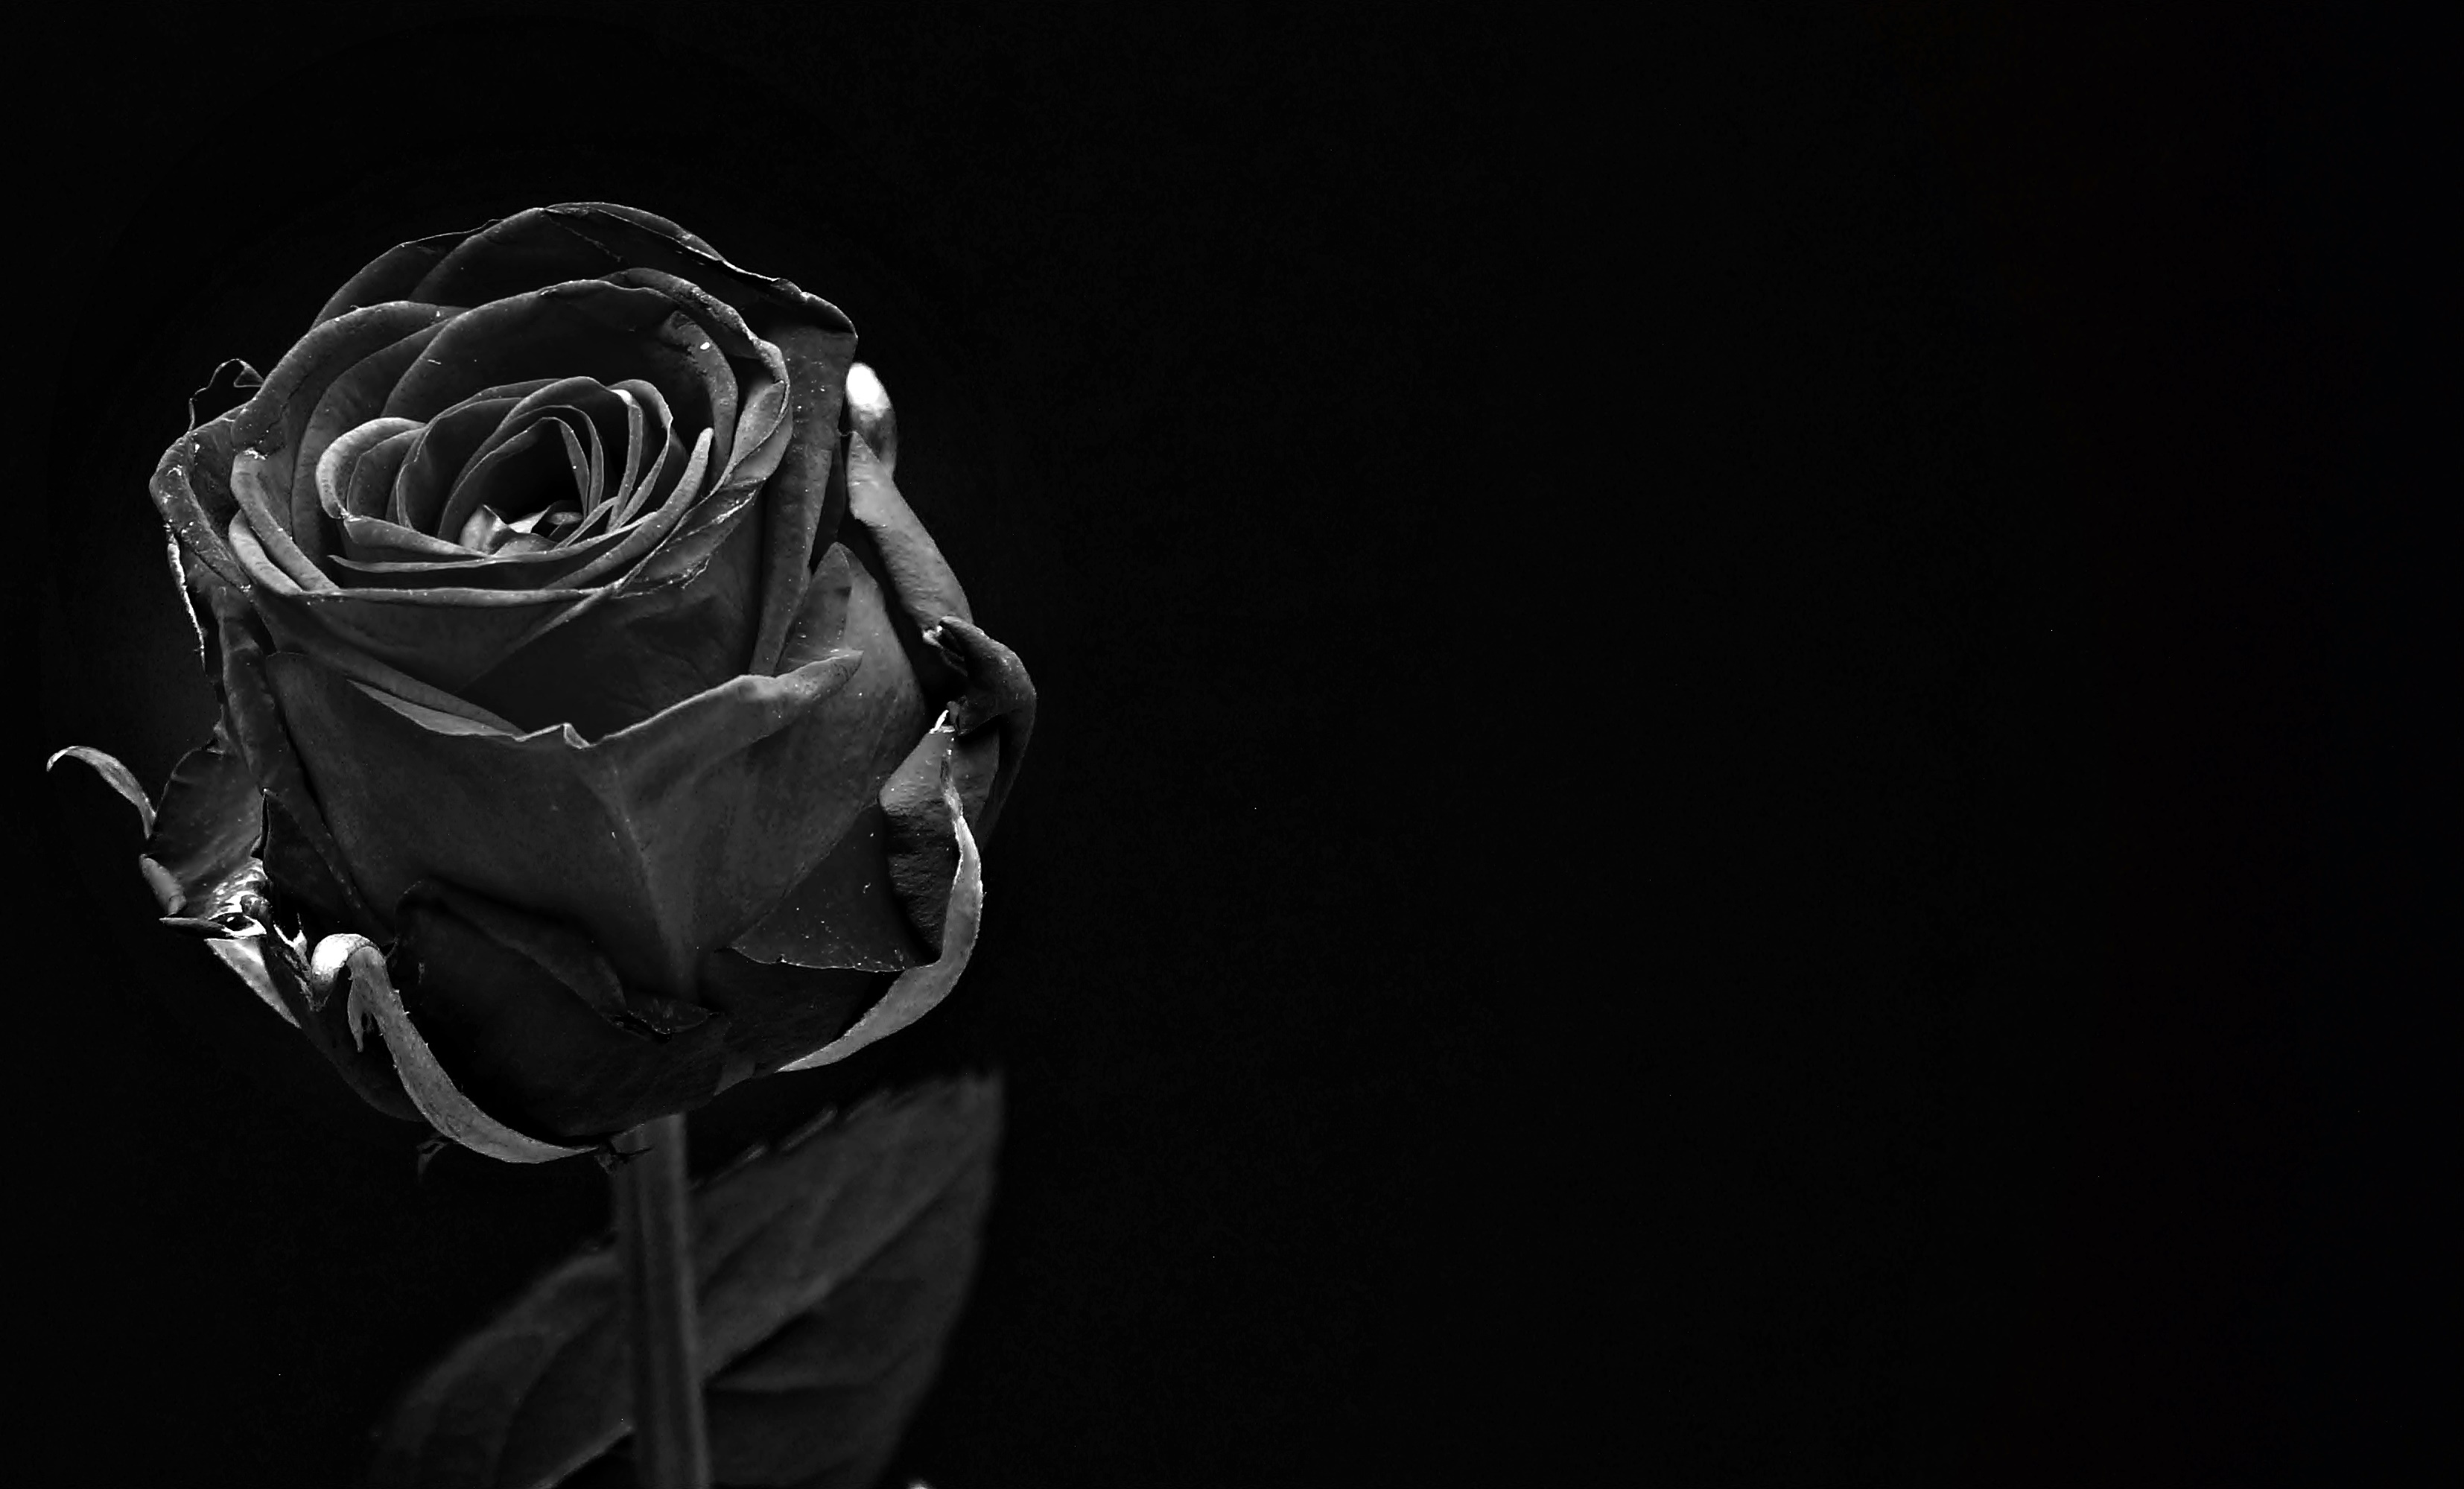 Wallpapers monochrome photography black rose rose bloom on the desktop